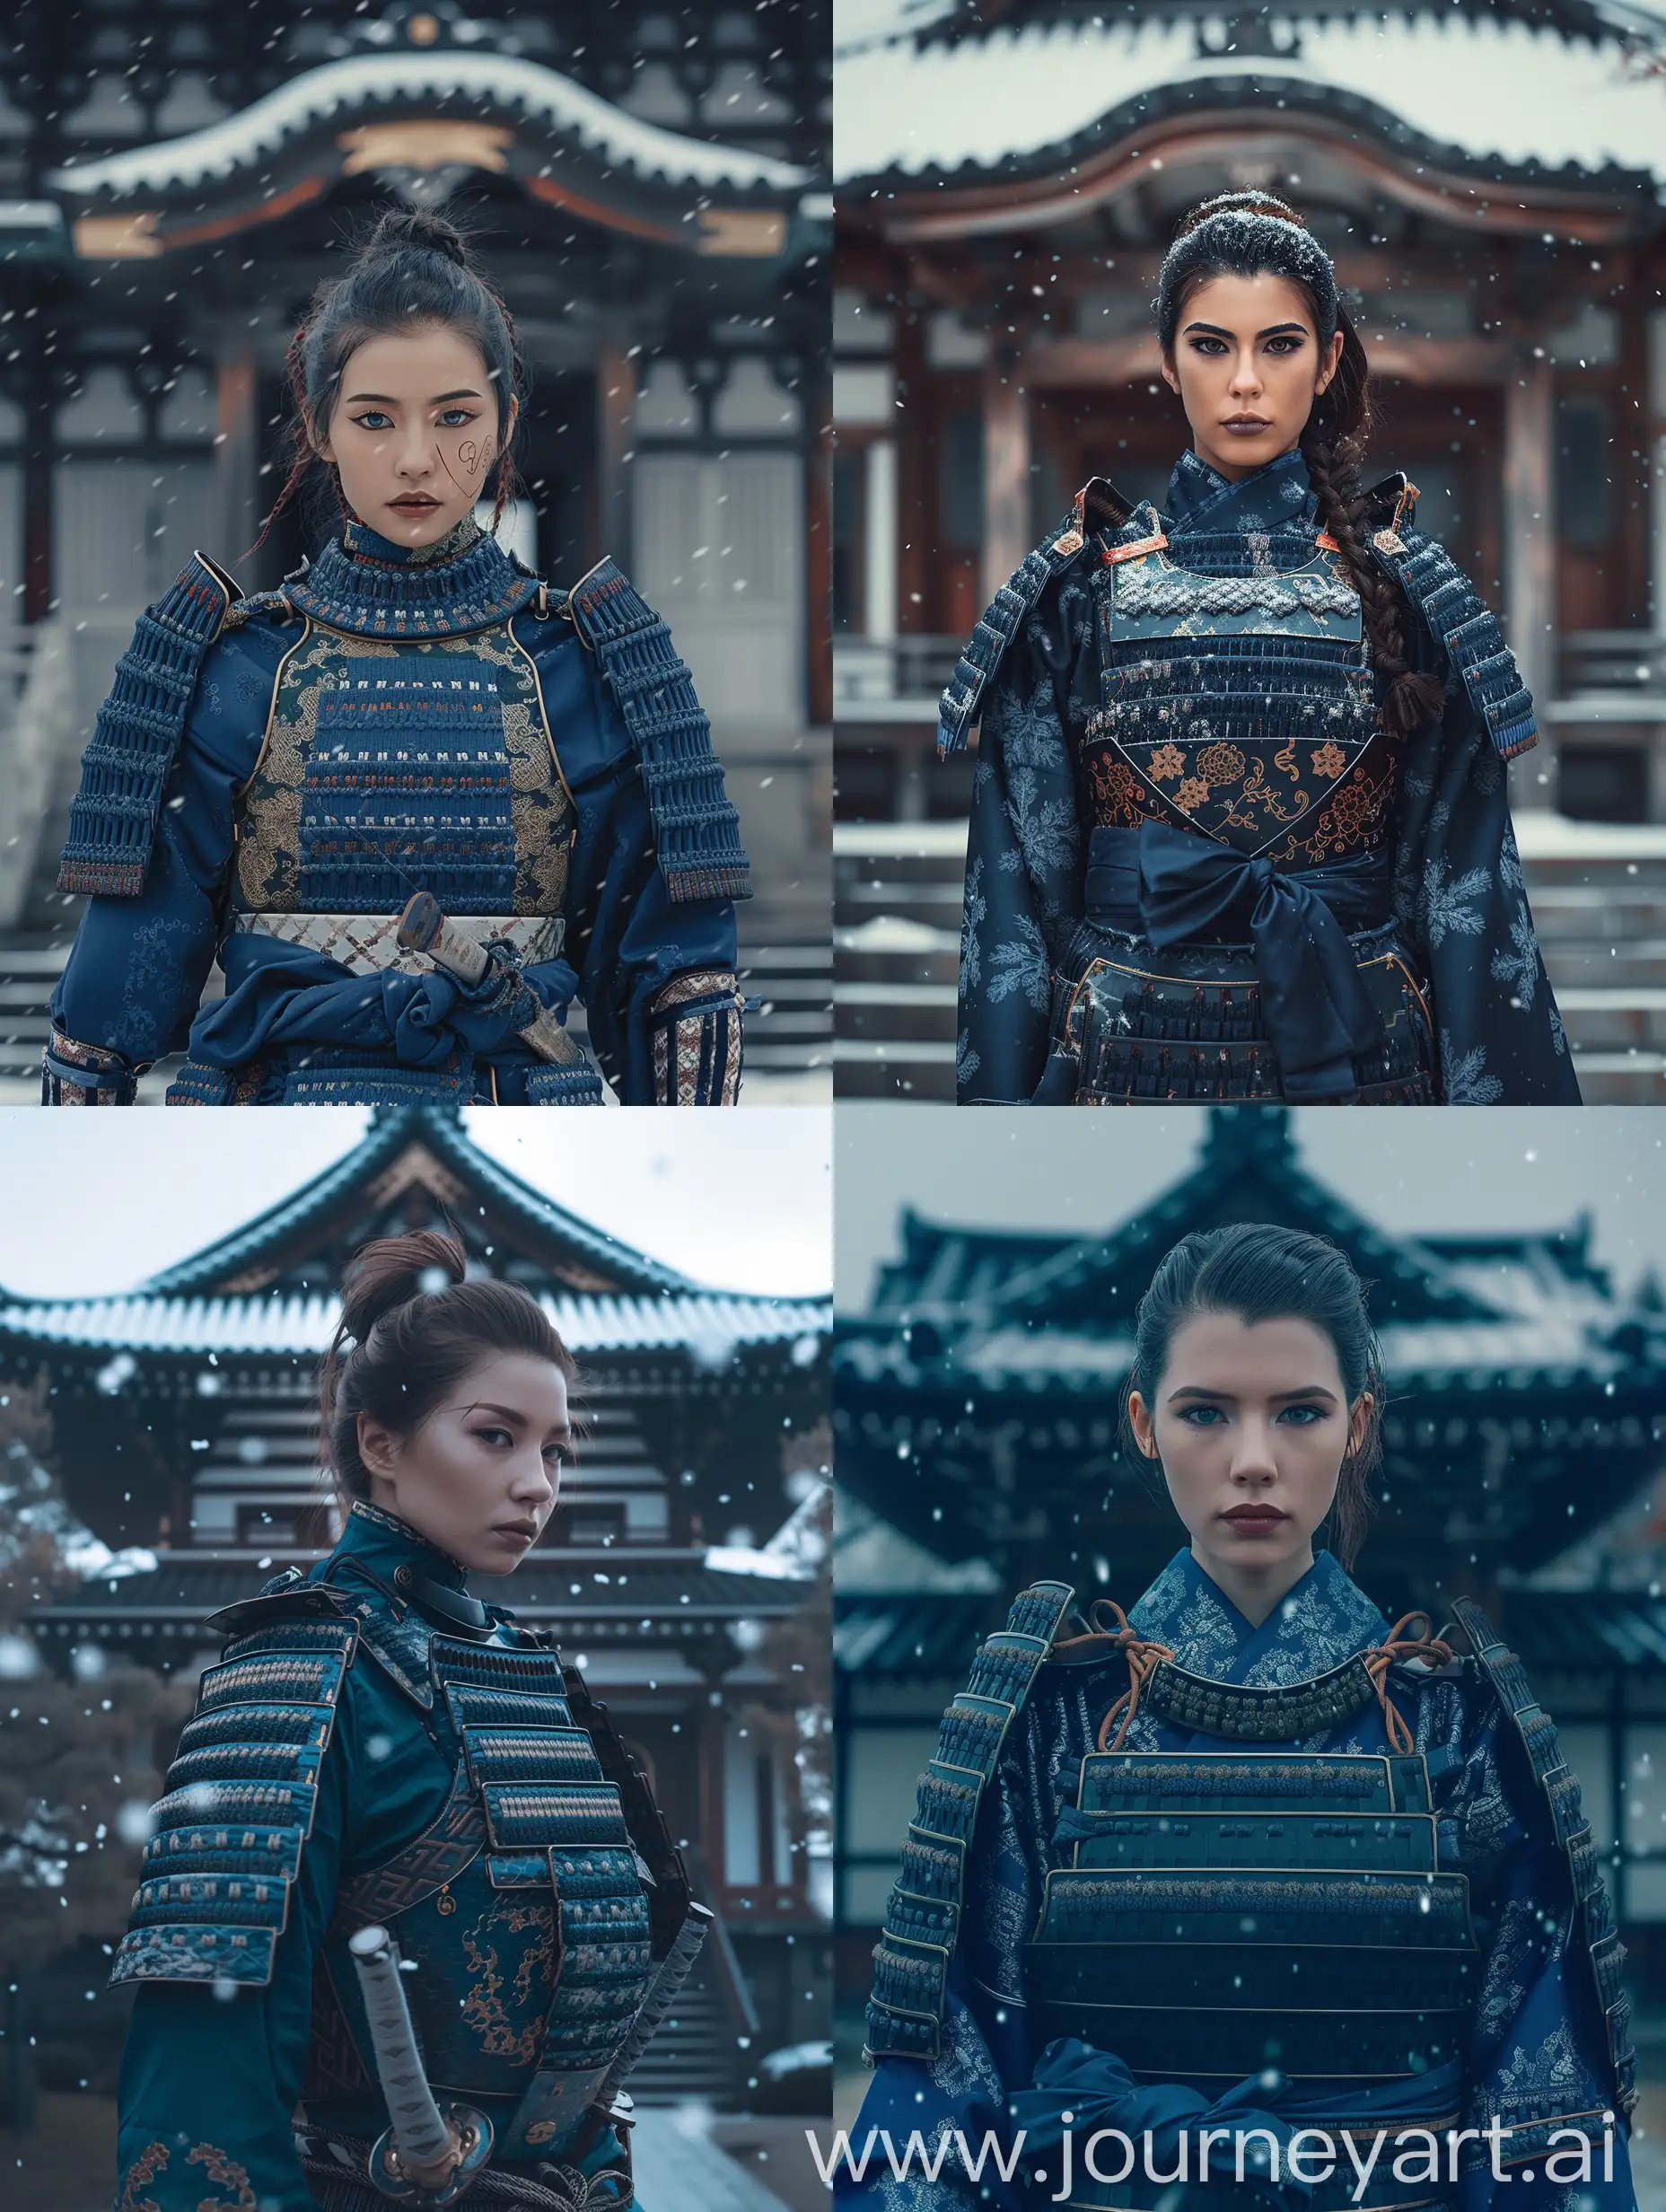 Elegant-Female-Samurai-Warrior-in-Blue-yoroi-Armor-at-Japanese-Temple